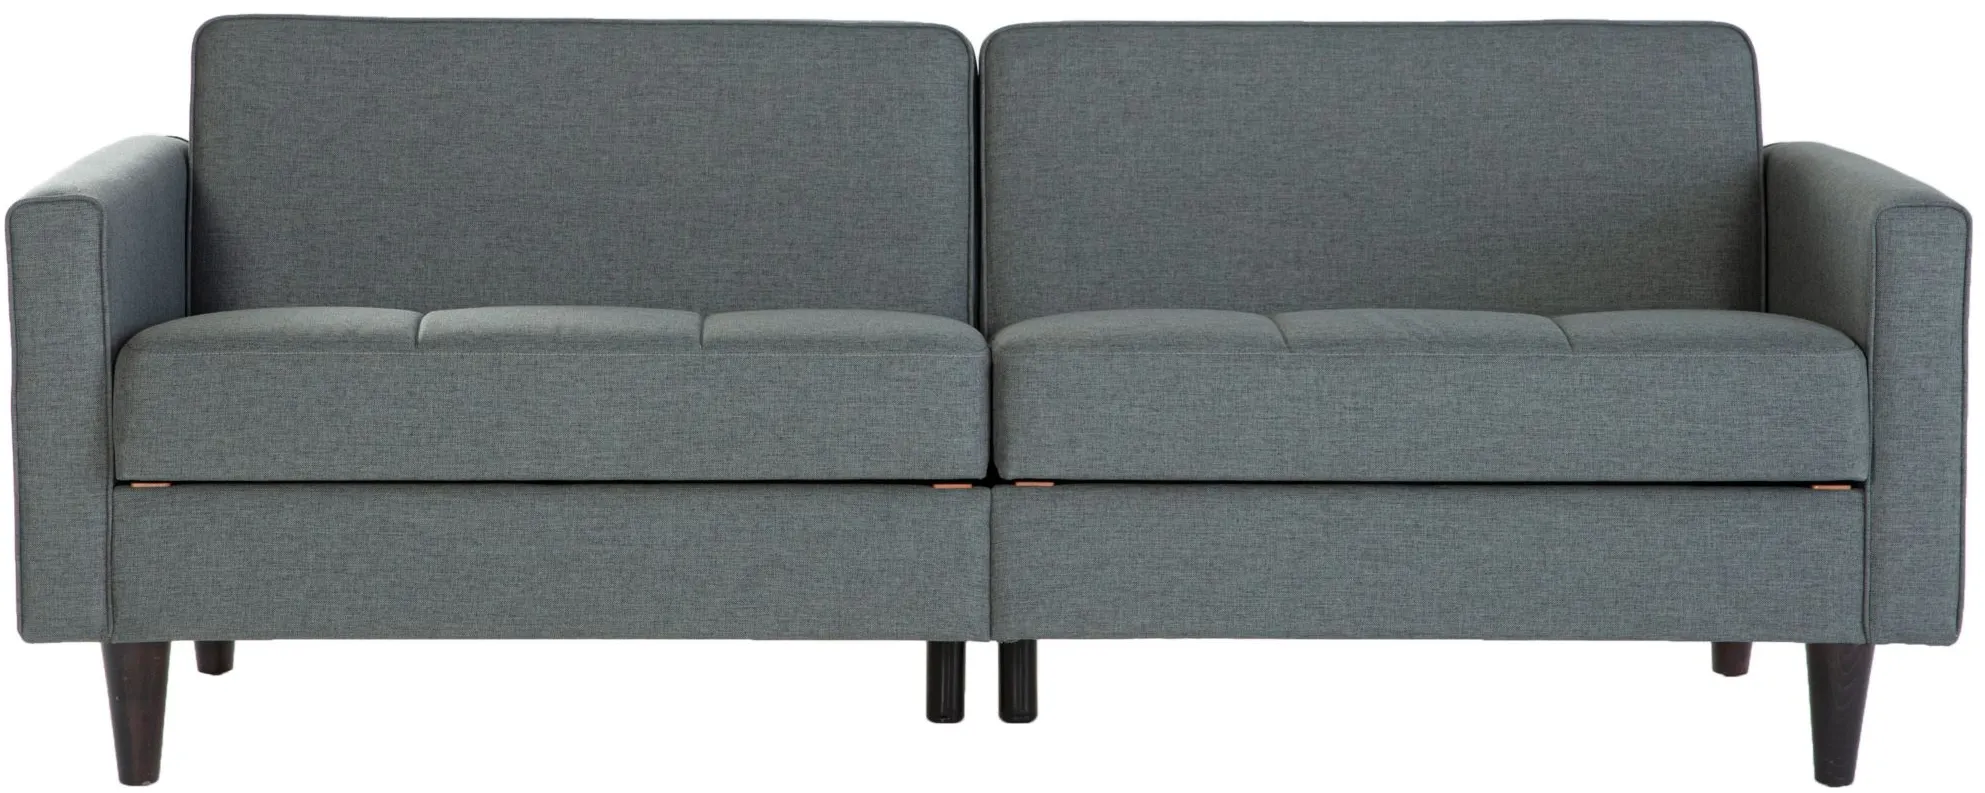 Covington Futon Sofa with Storage in Gray by HUDSON GLOBAL MARKETING USA